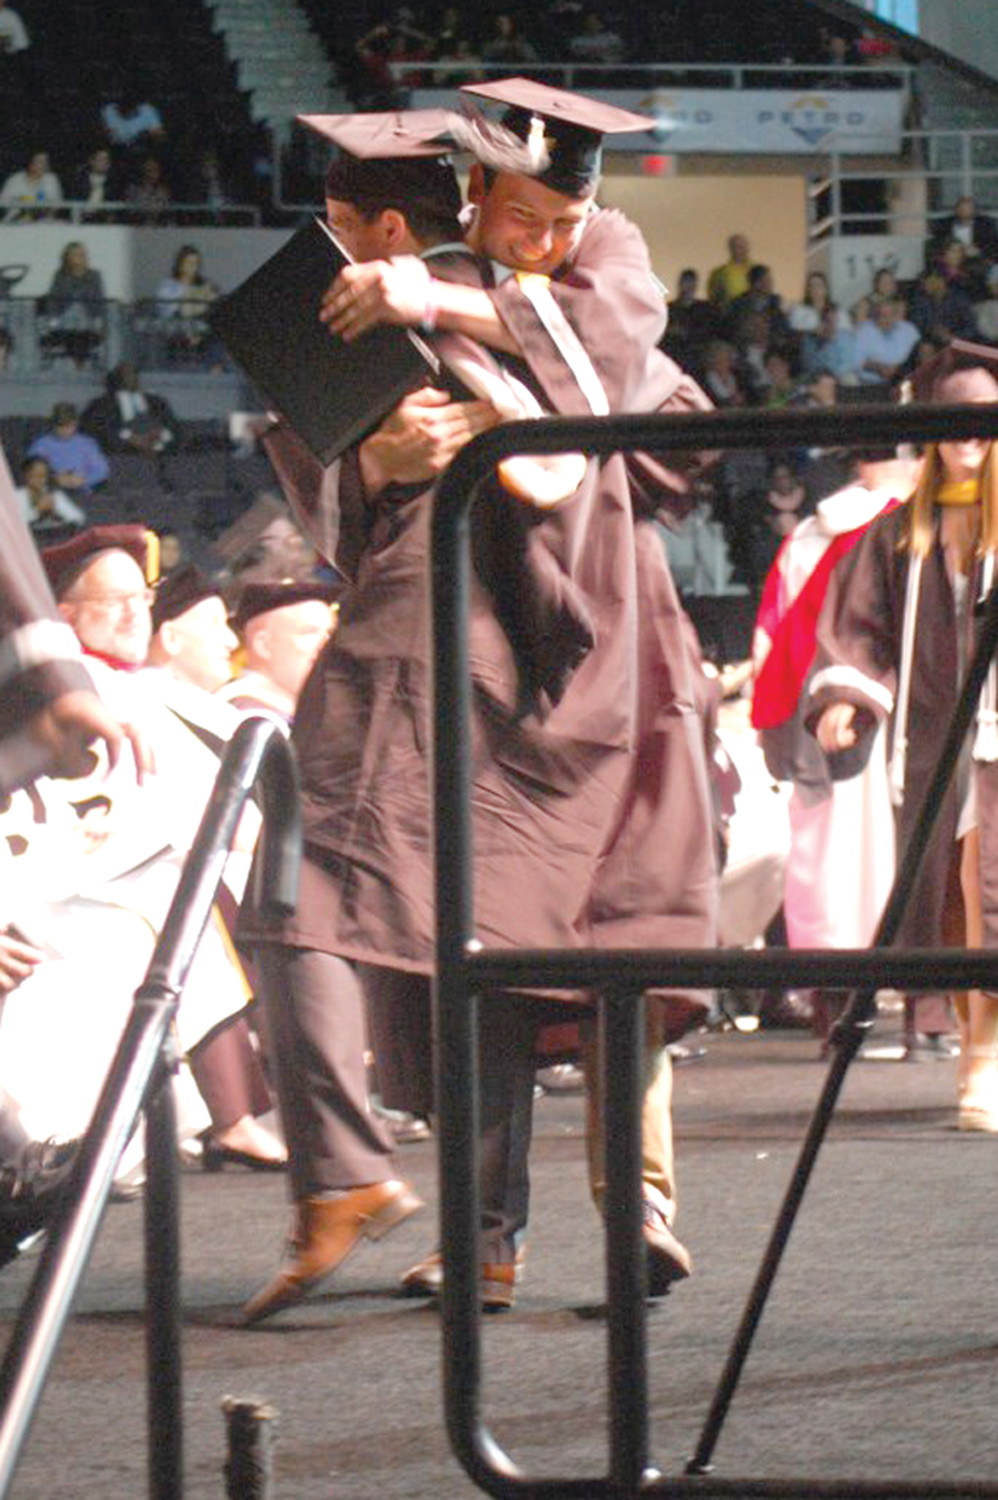 Students hug after receiving their diplomas.